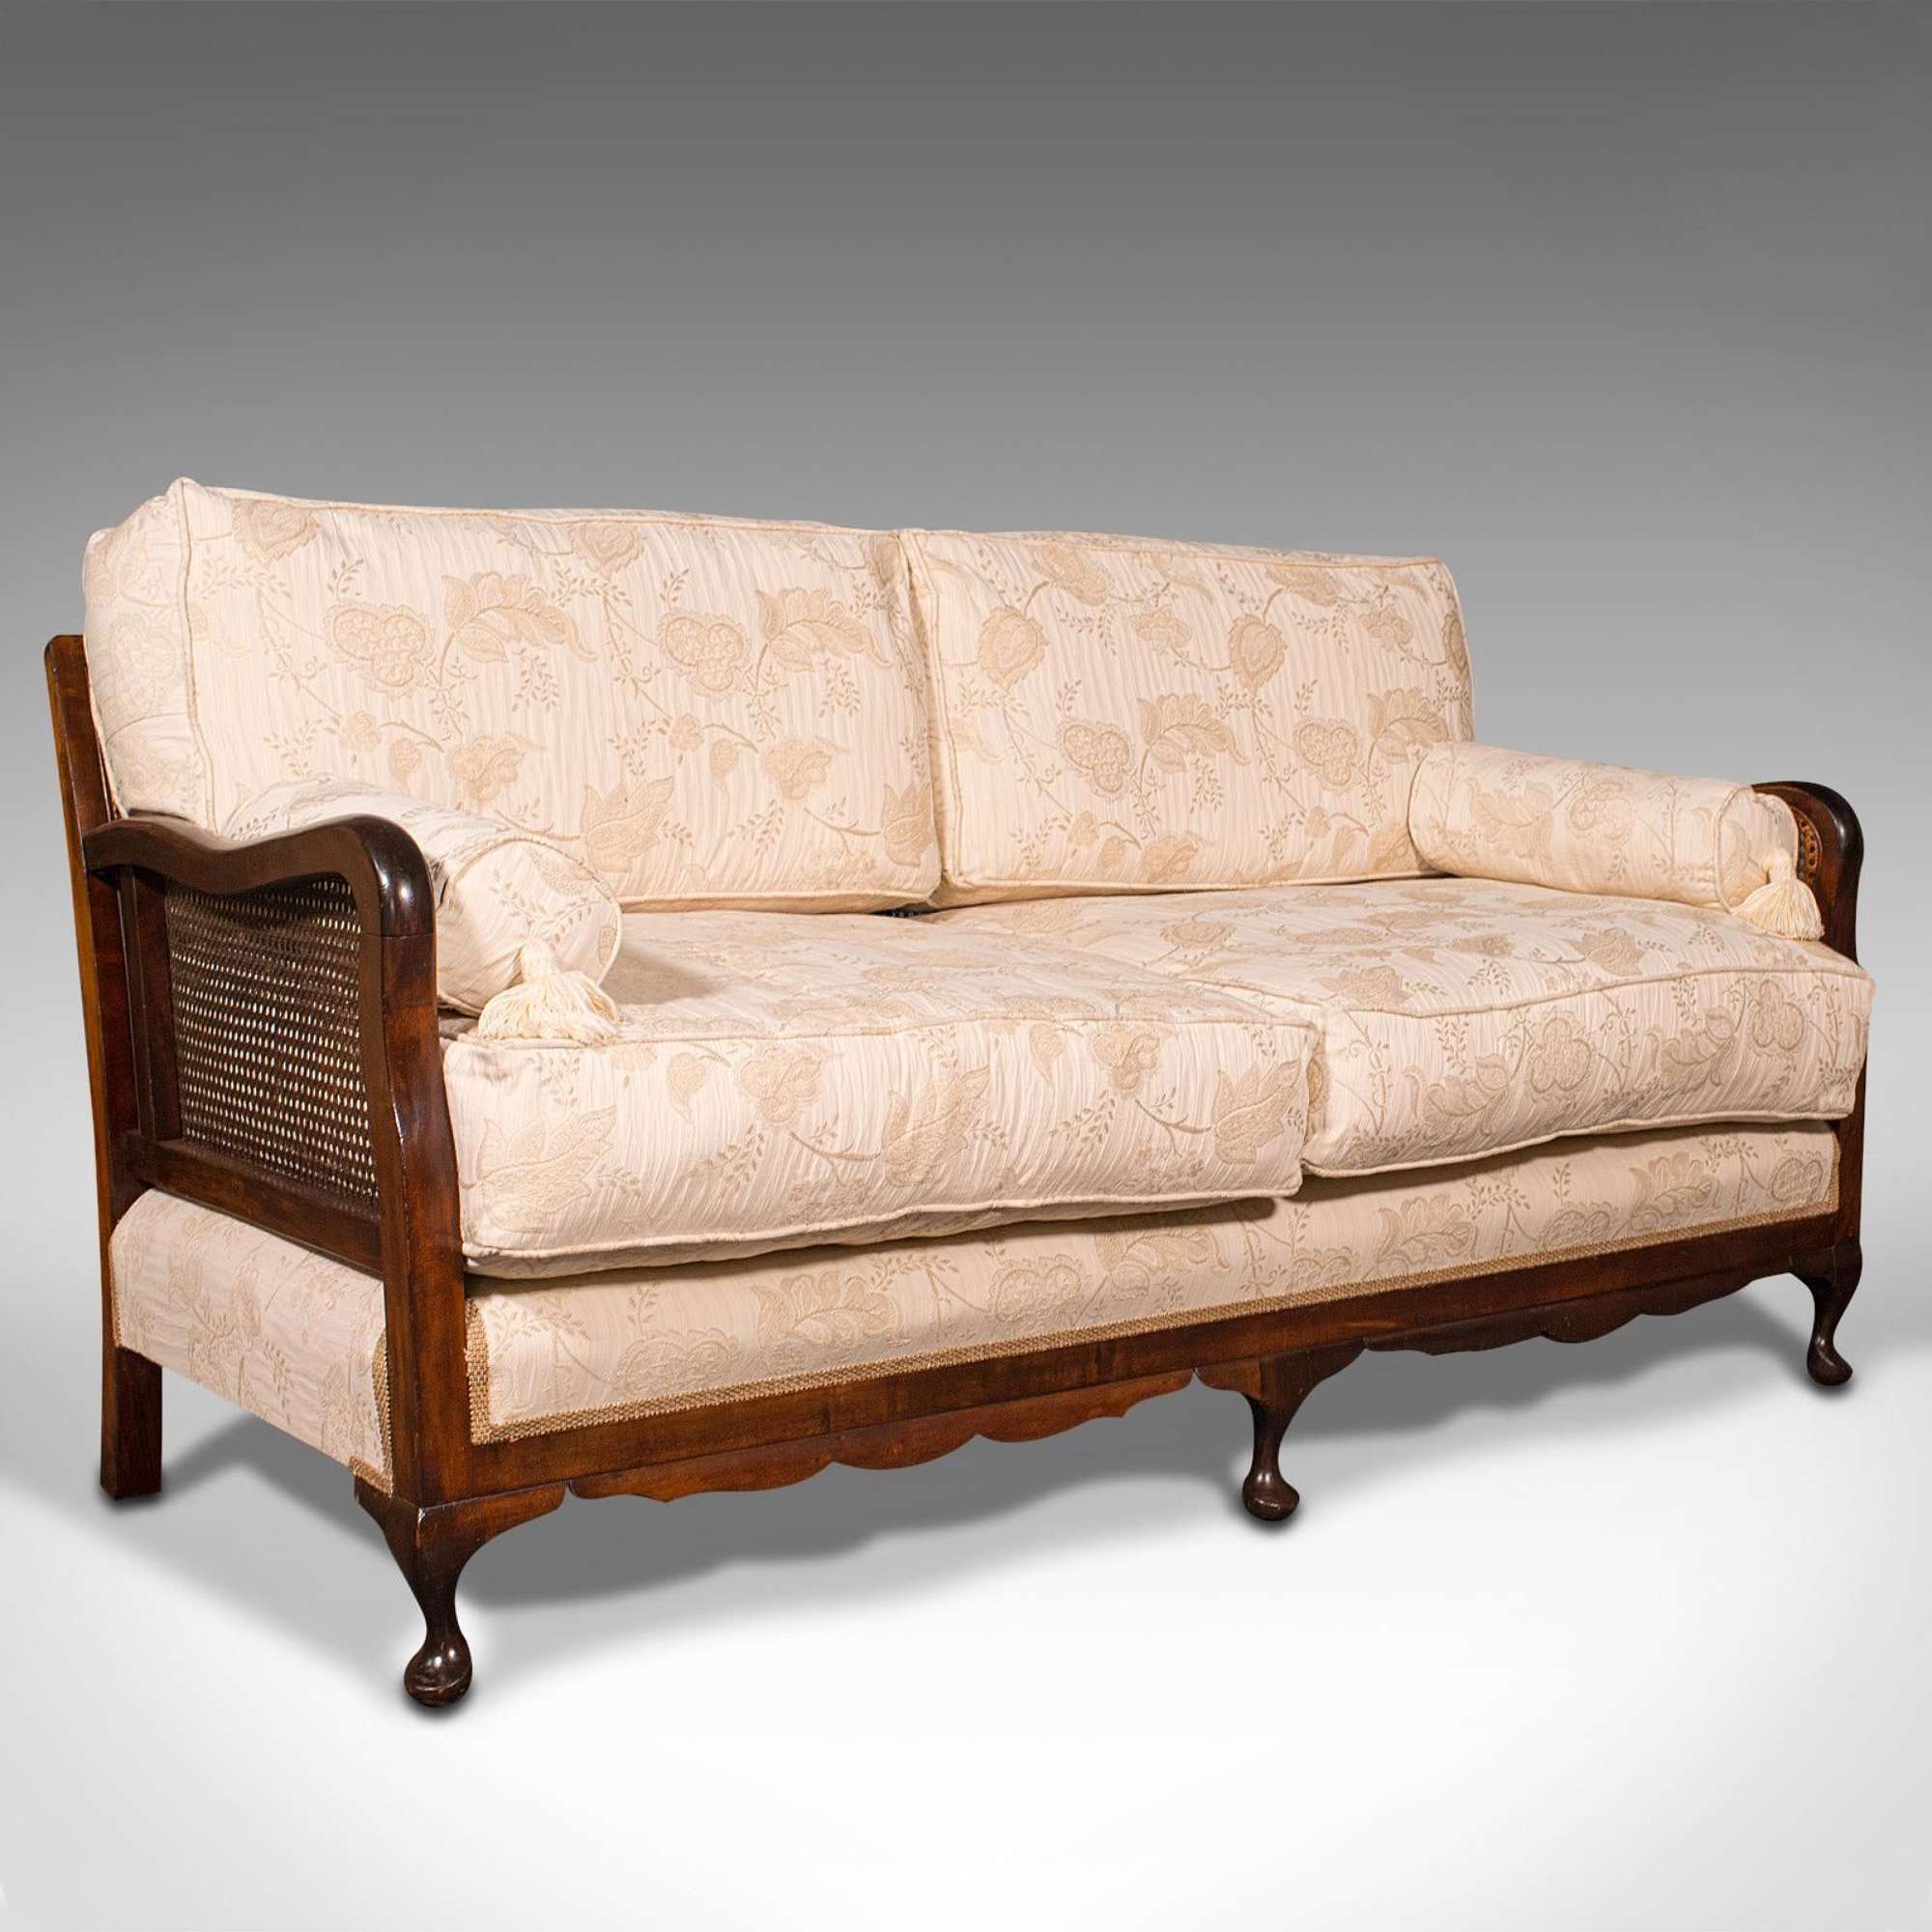 Antique Bergere Sofa, English, Beech, Cane, 2 Seat Settee, Edwardian C.1910